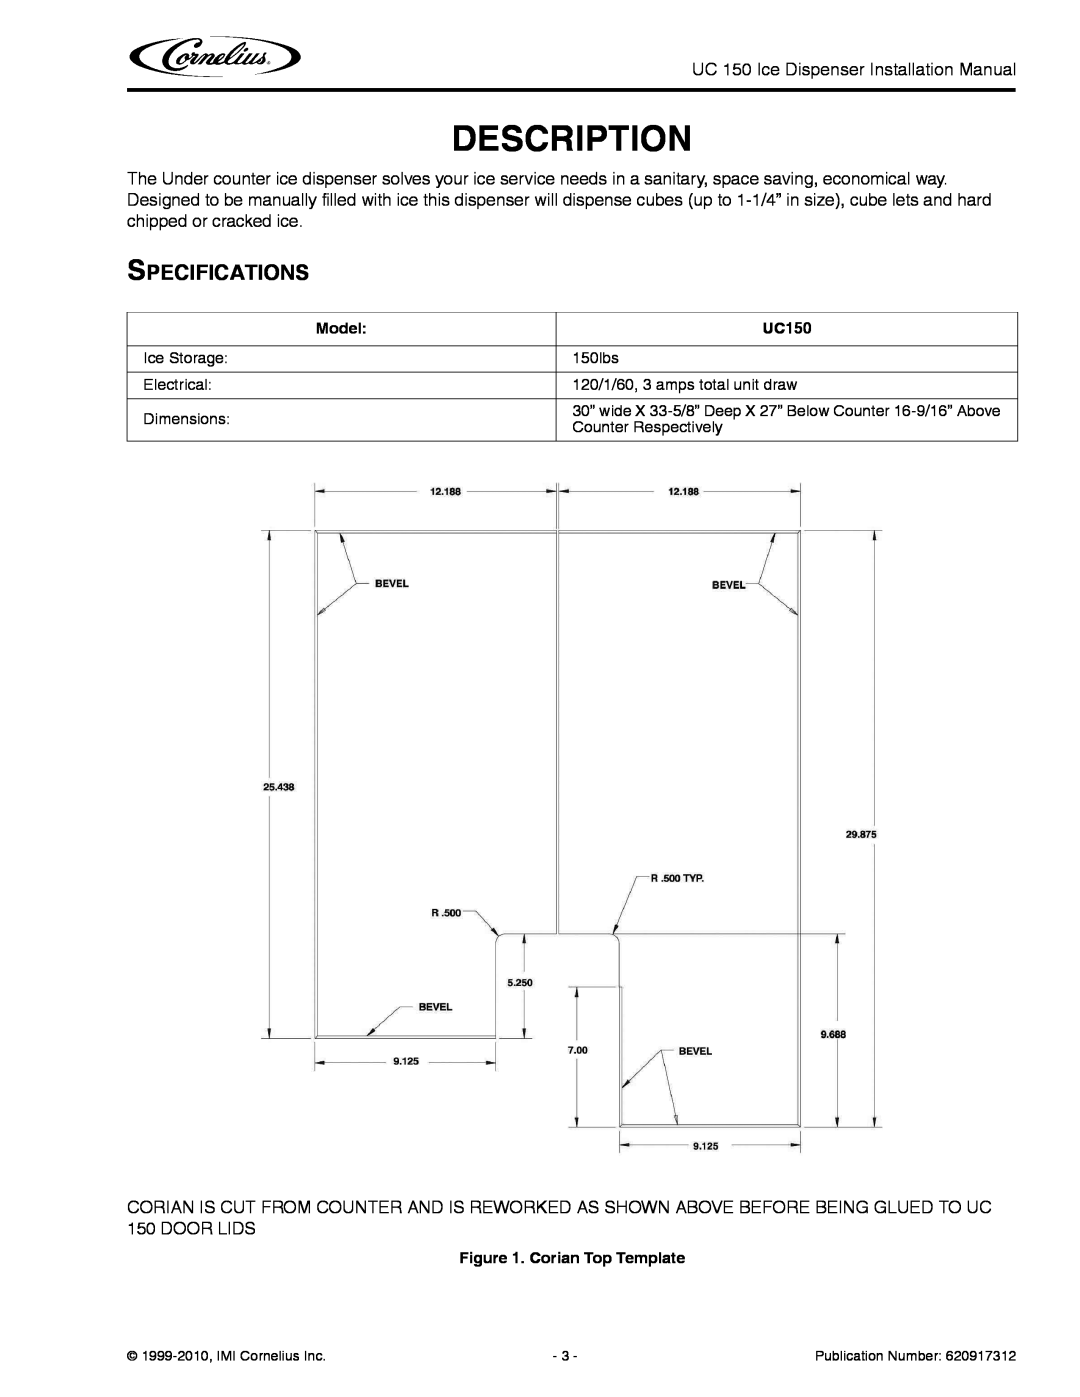 Cornelius UC 150 installation manual Description, Specifications 